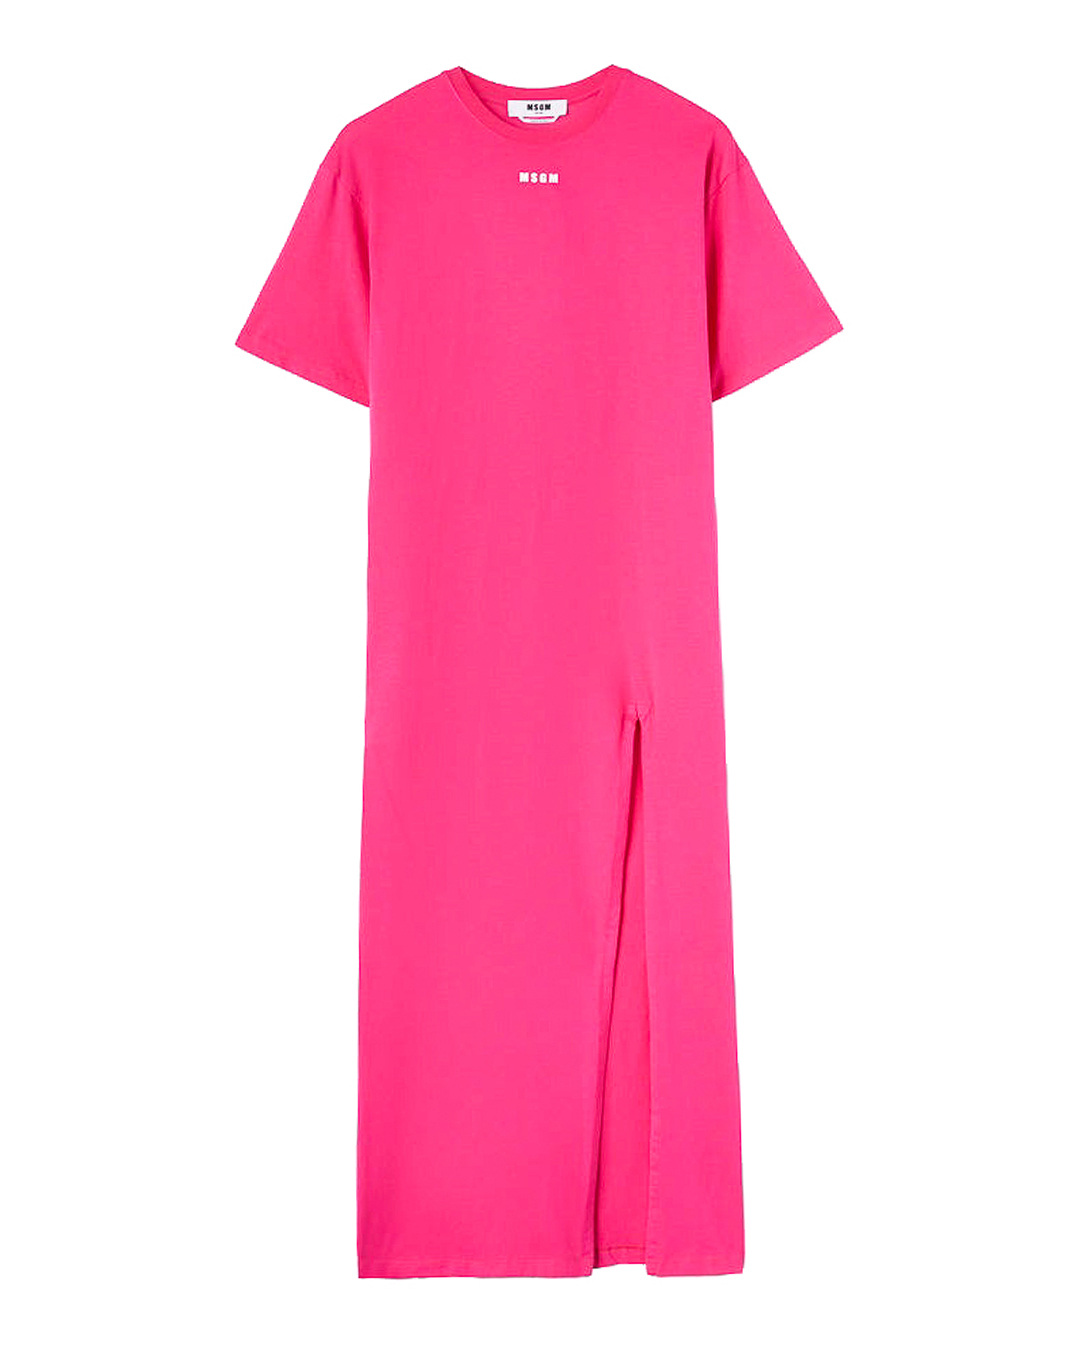 платье-футболка MSGM женское платье рубашка с леопардовым принтом и короткими рукавами vero moda